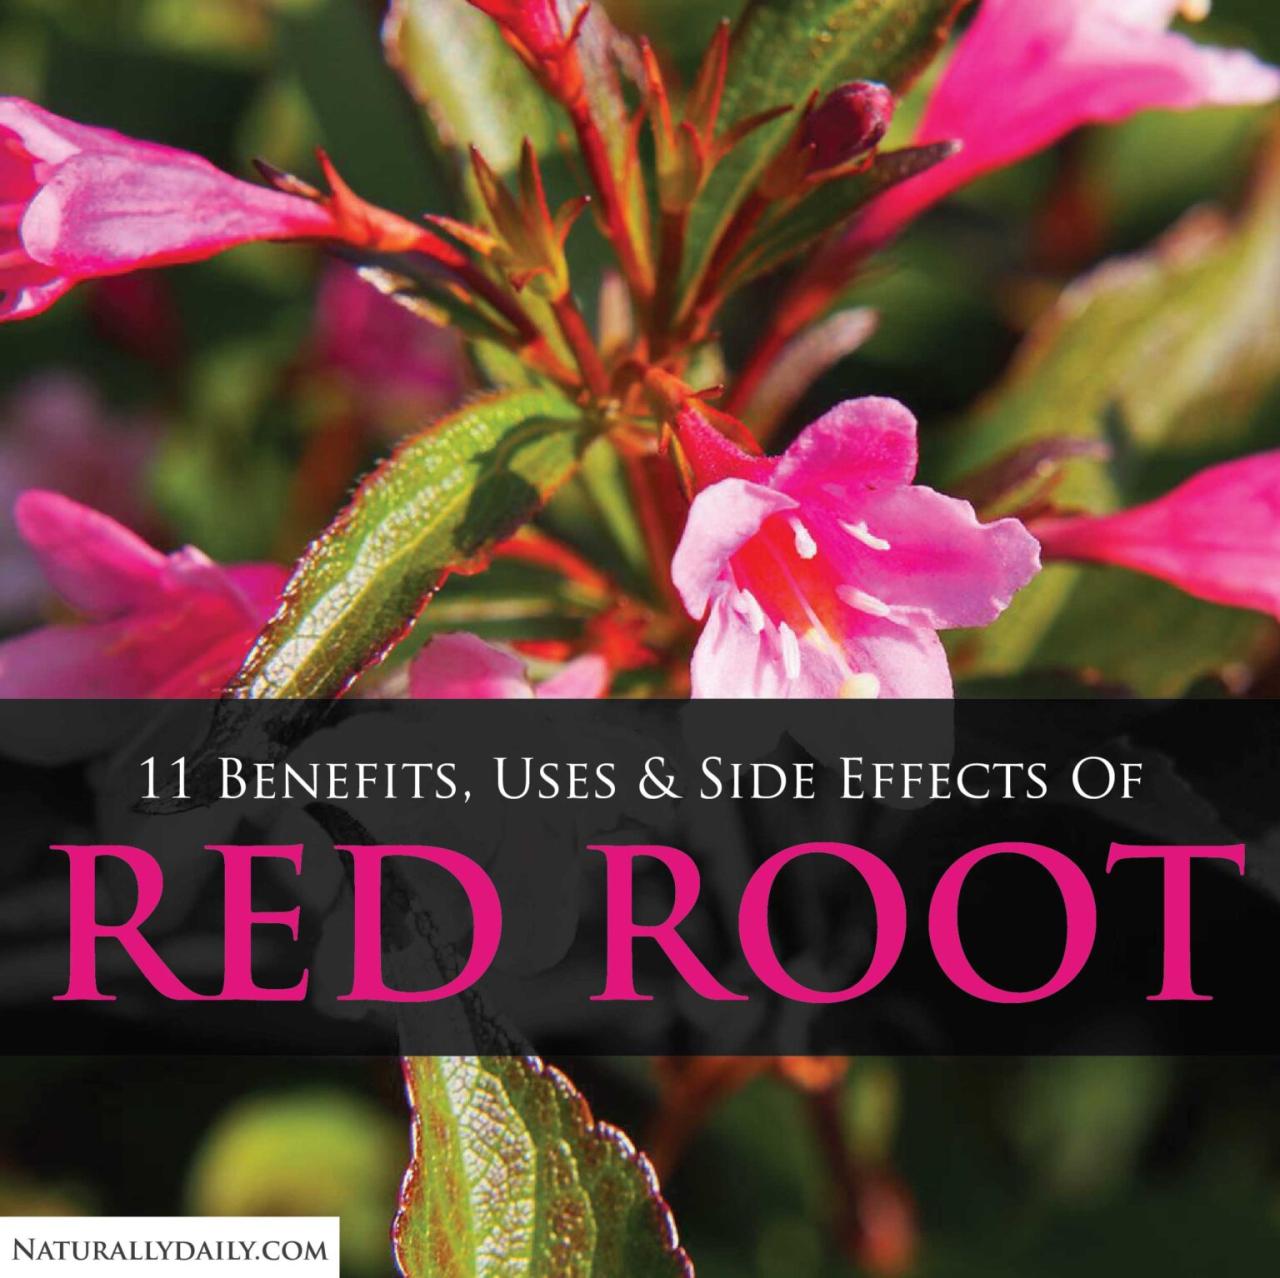 Manfaat tanaman pucuk merah